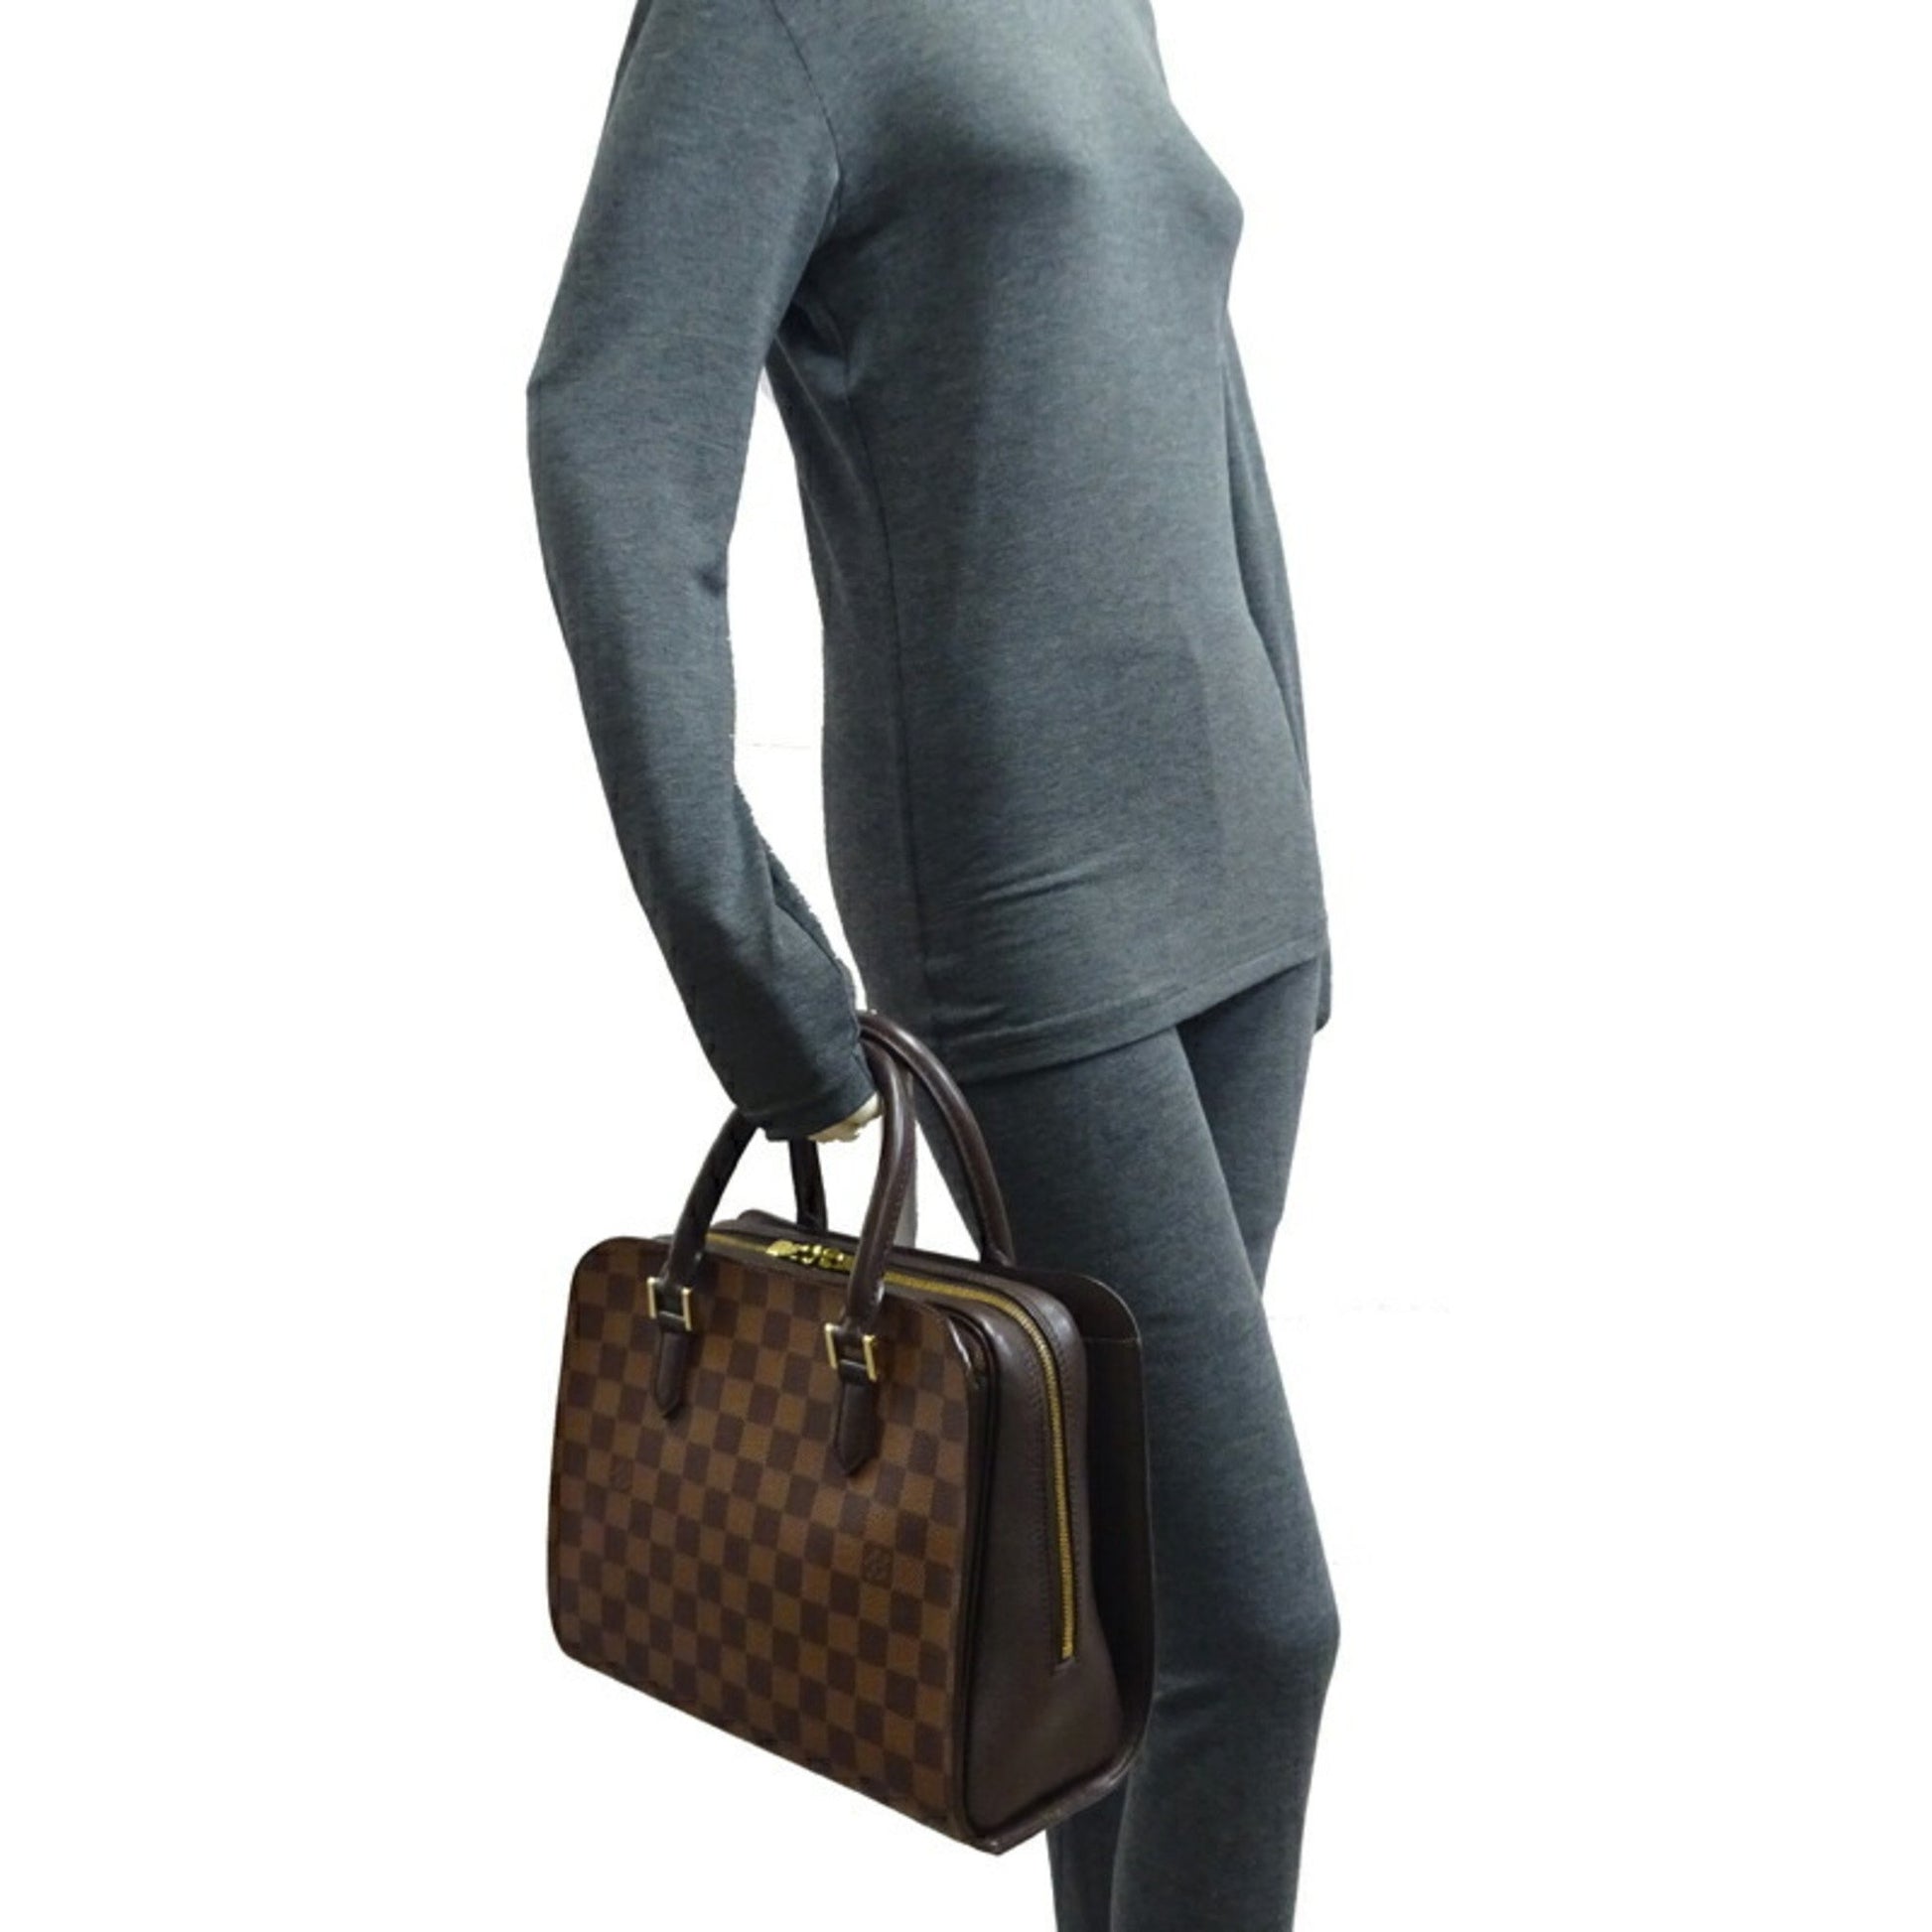 Louis Vuitton Triana Women's Handbag N51155 Damier Ebene (Brown)